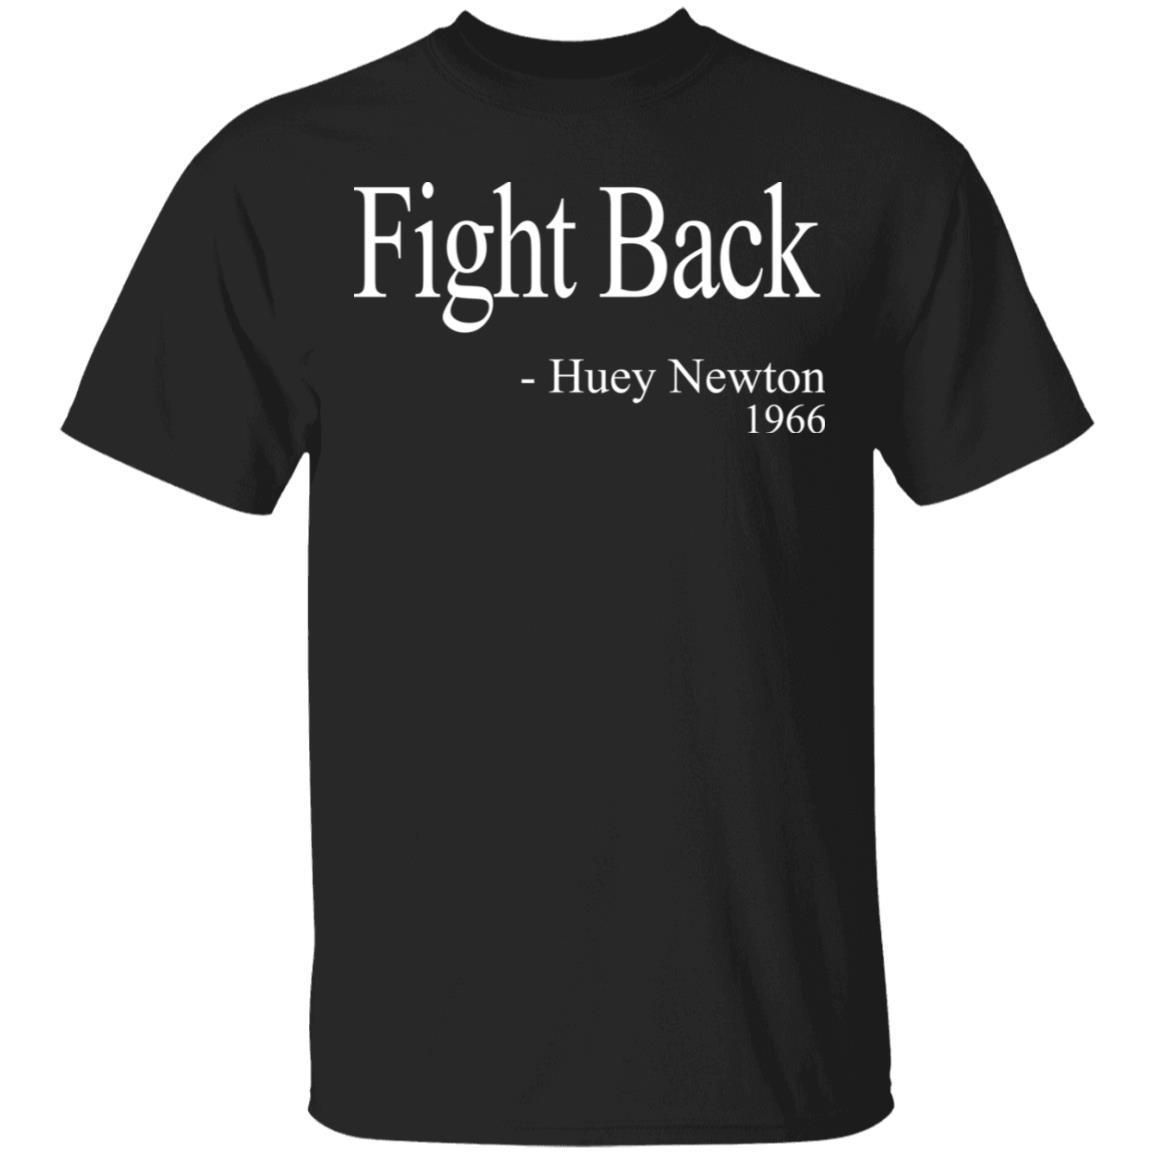 Fight Back - Huey Newton 1966 T-shirt